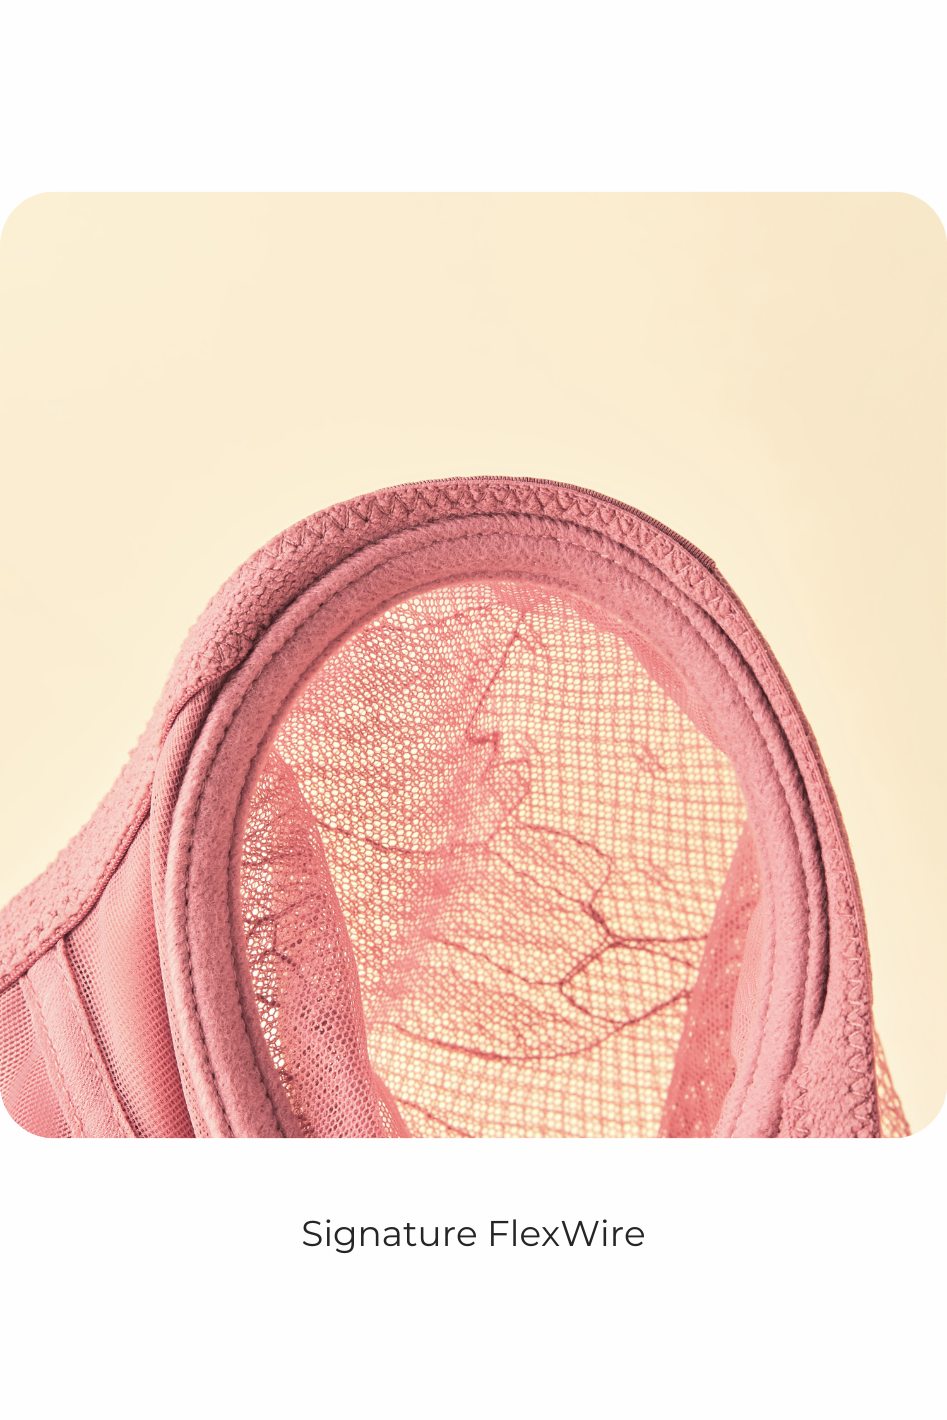 Understance Nora FlexWire Full Coverage Unpadded Lace Bra - #color_powder-pink